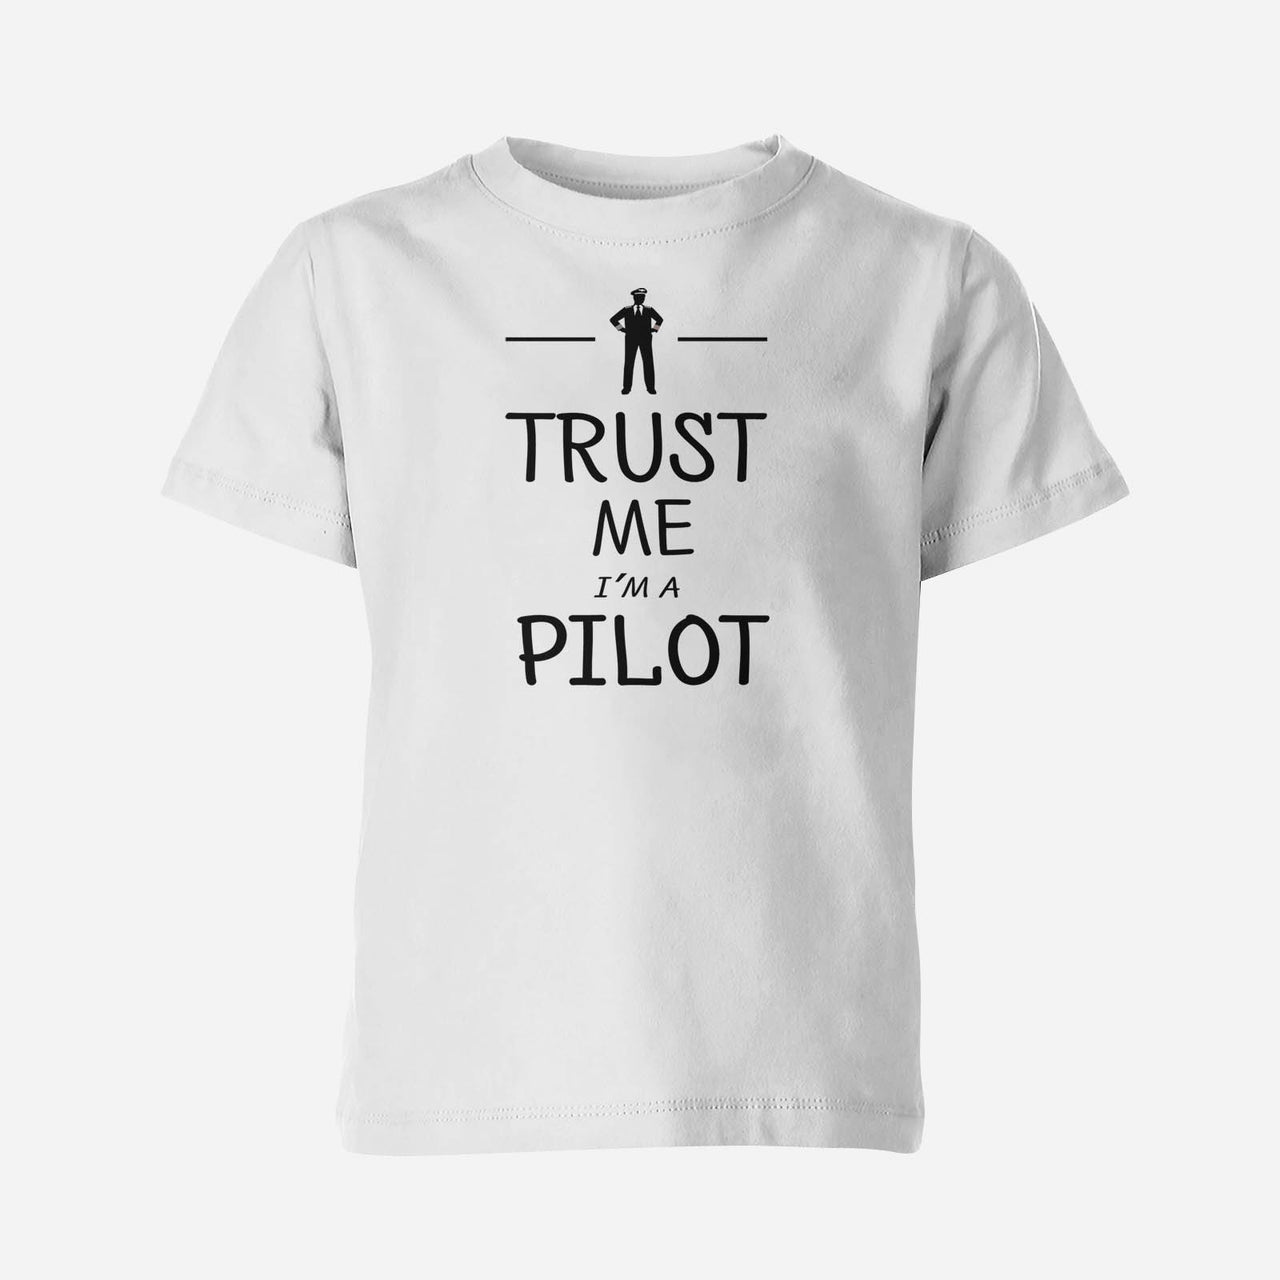 Trust Me I'm a Pilot Designed Children T-Shirts